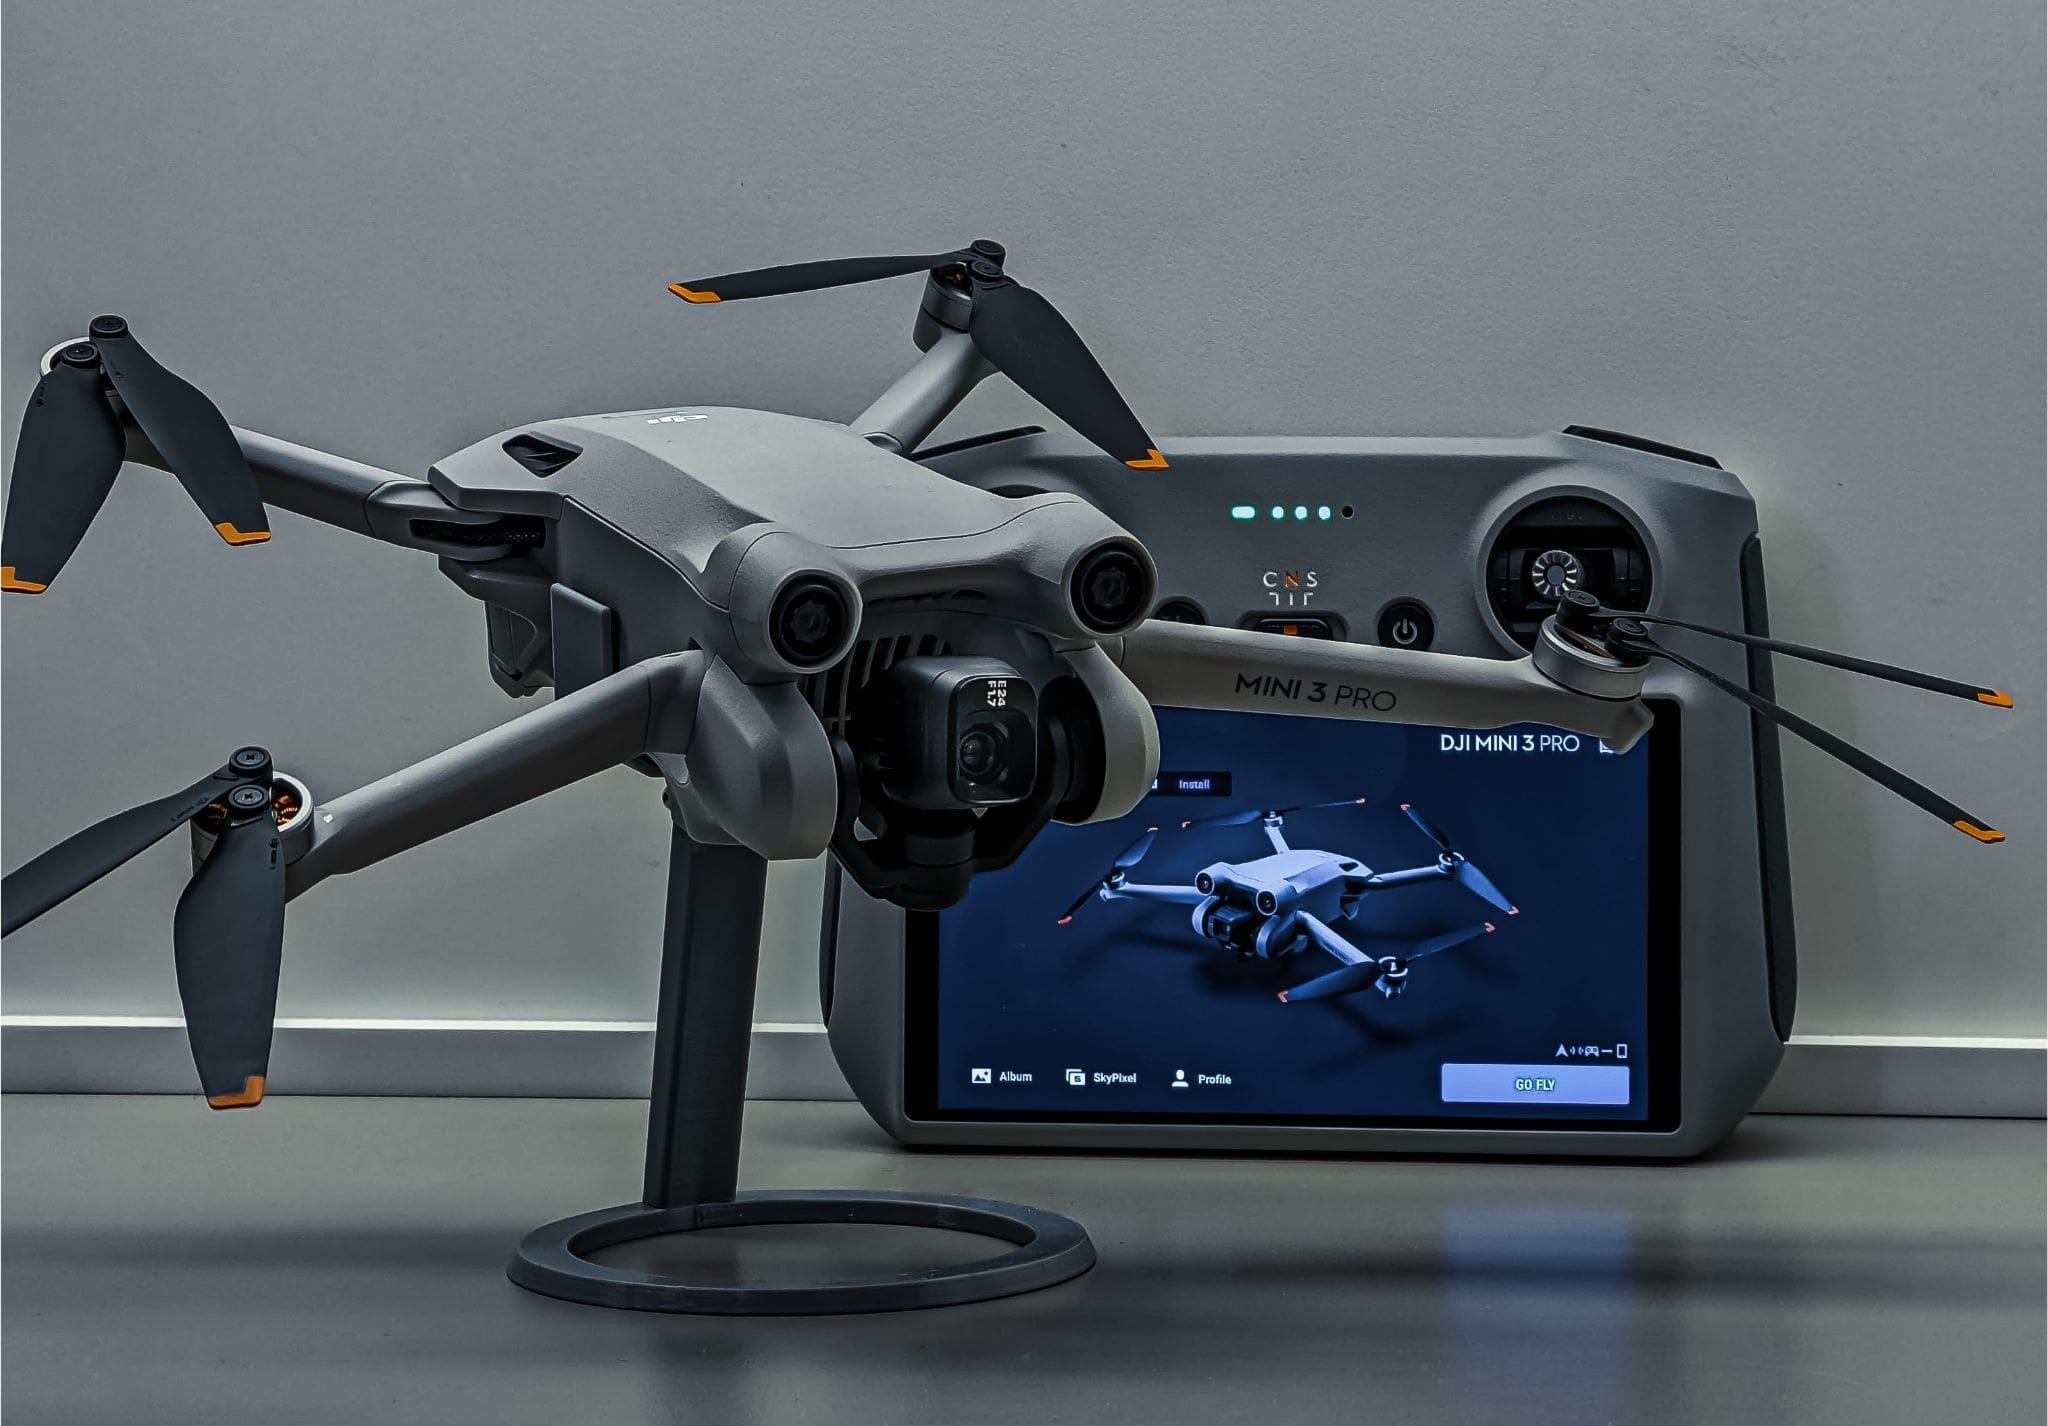 DJI drone and remote control